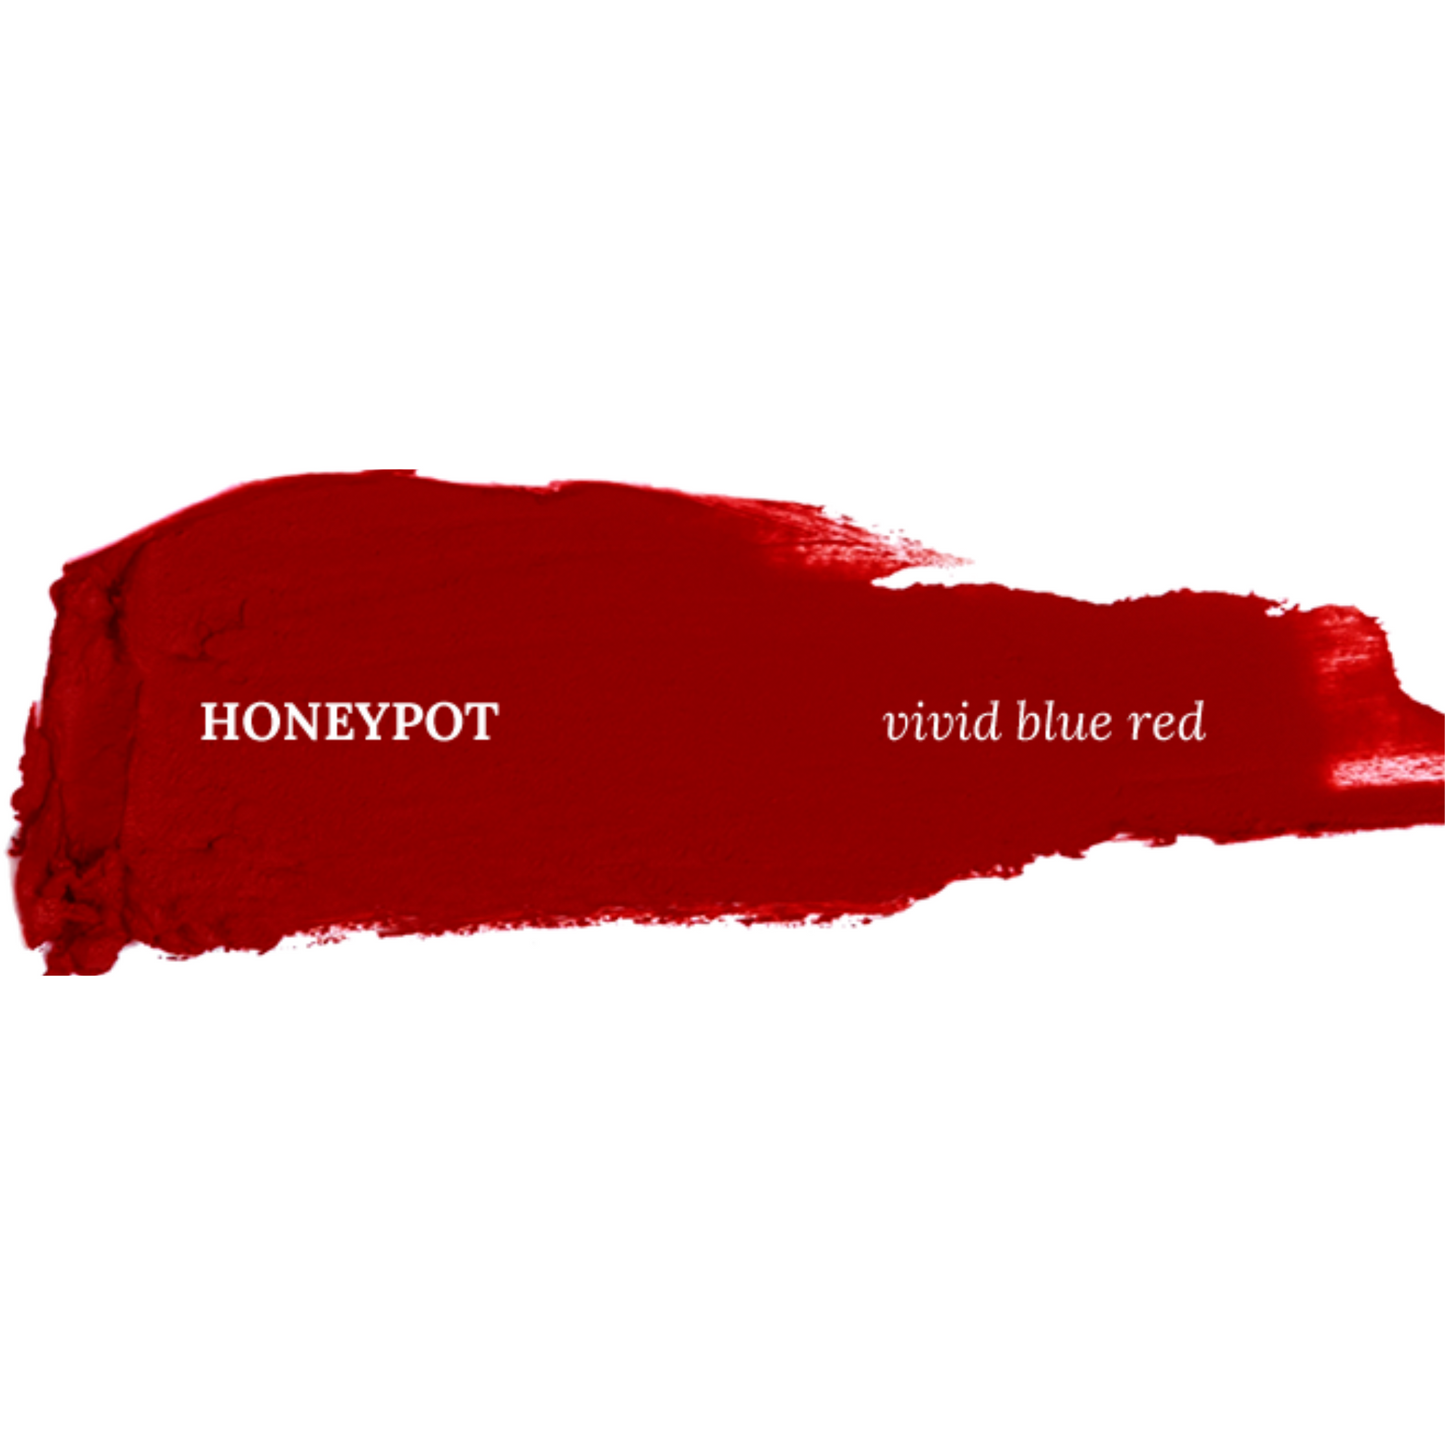 Vivid blue red lipstick - HONEYPOT